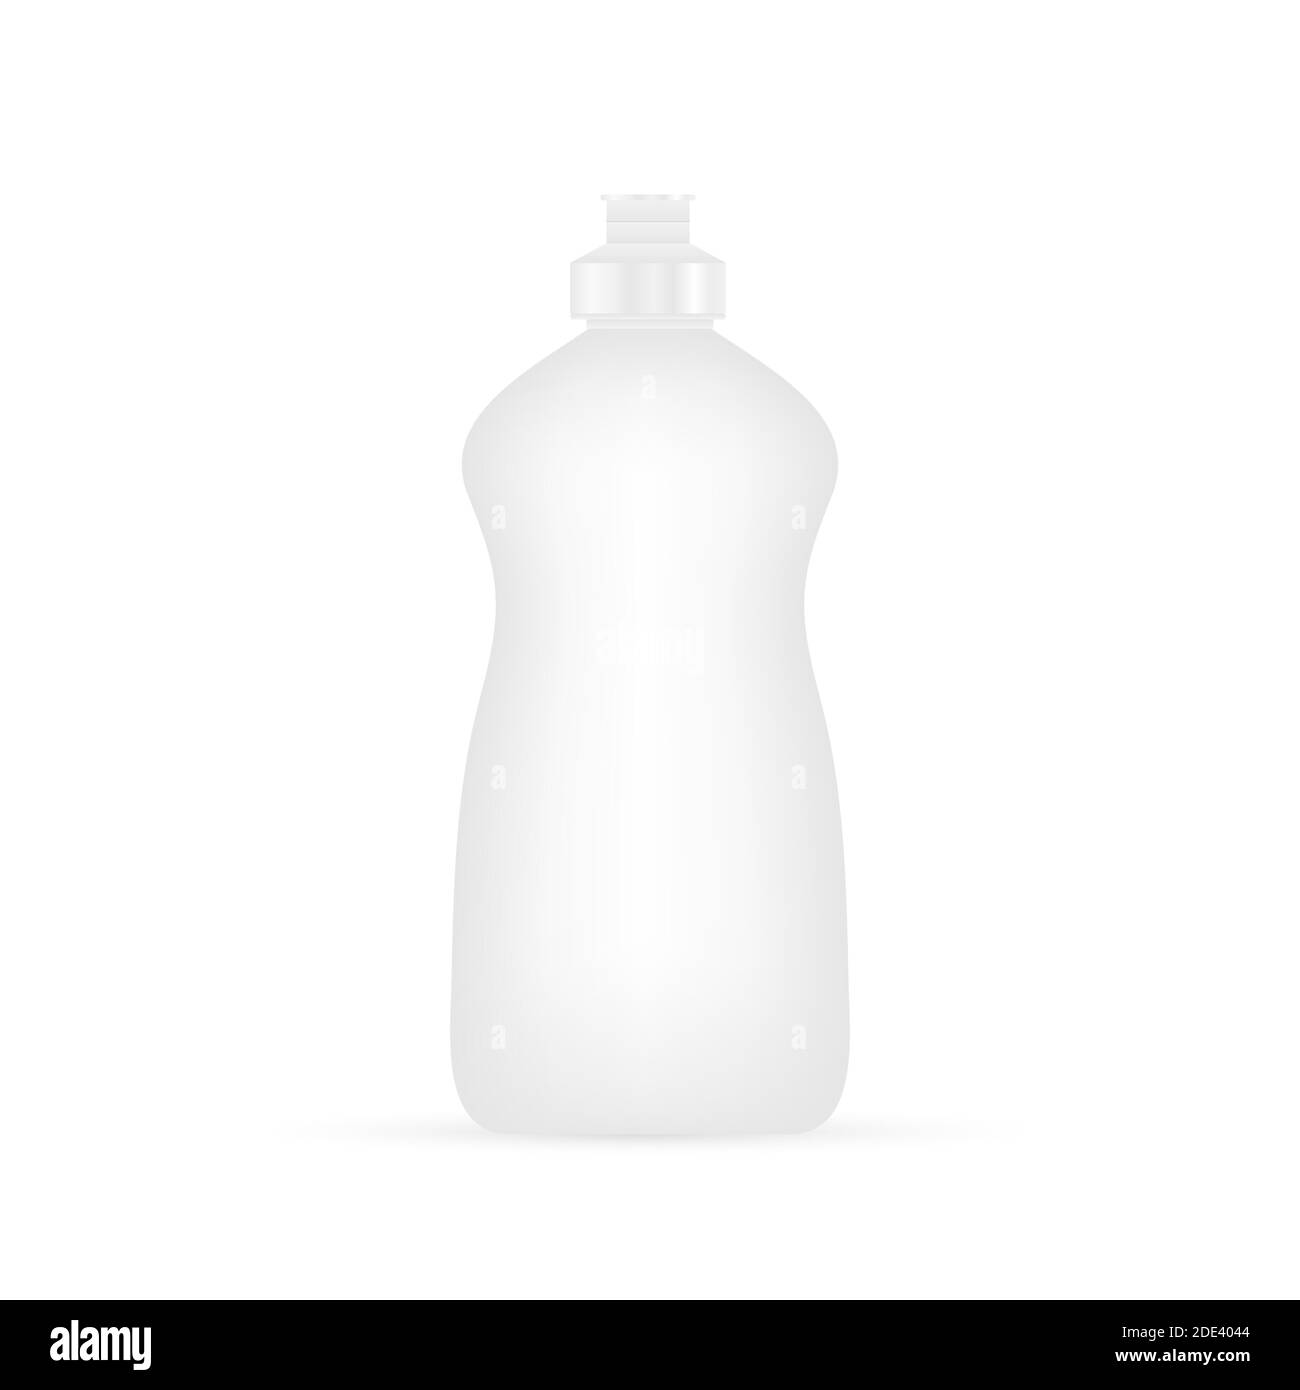 Dishwashing liquid. Cleaning Bottle Isolated On White Background. Vector stock illustration. Stock Vector